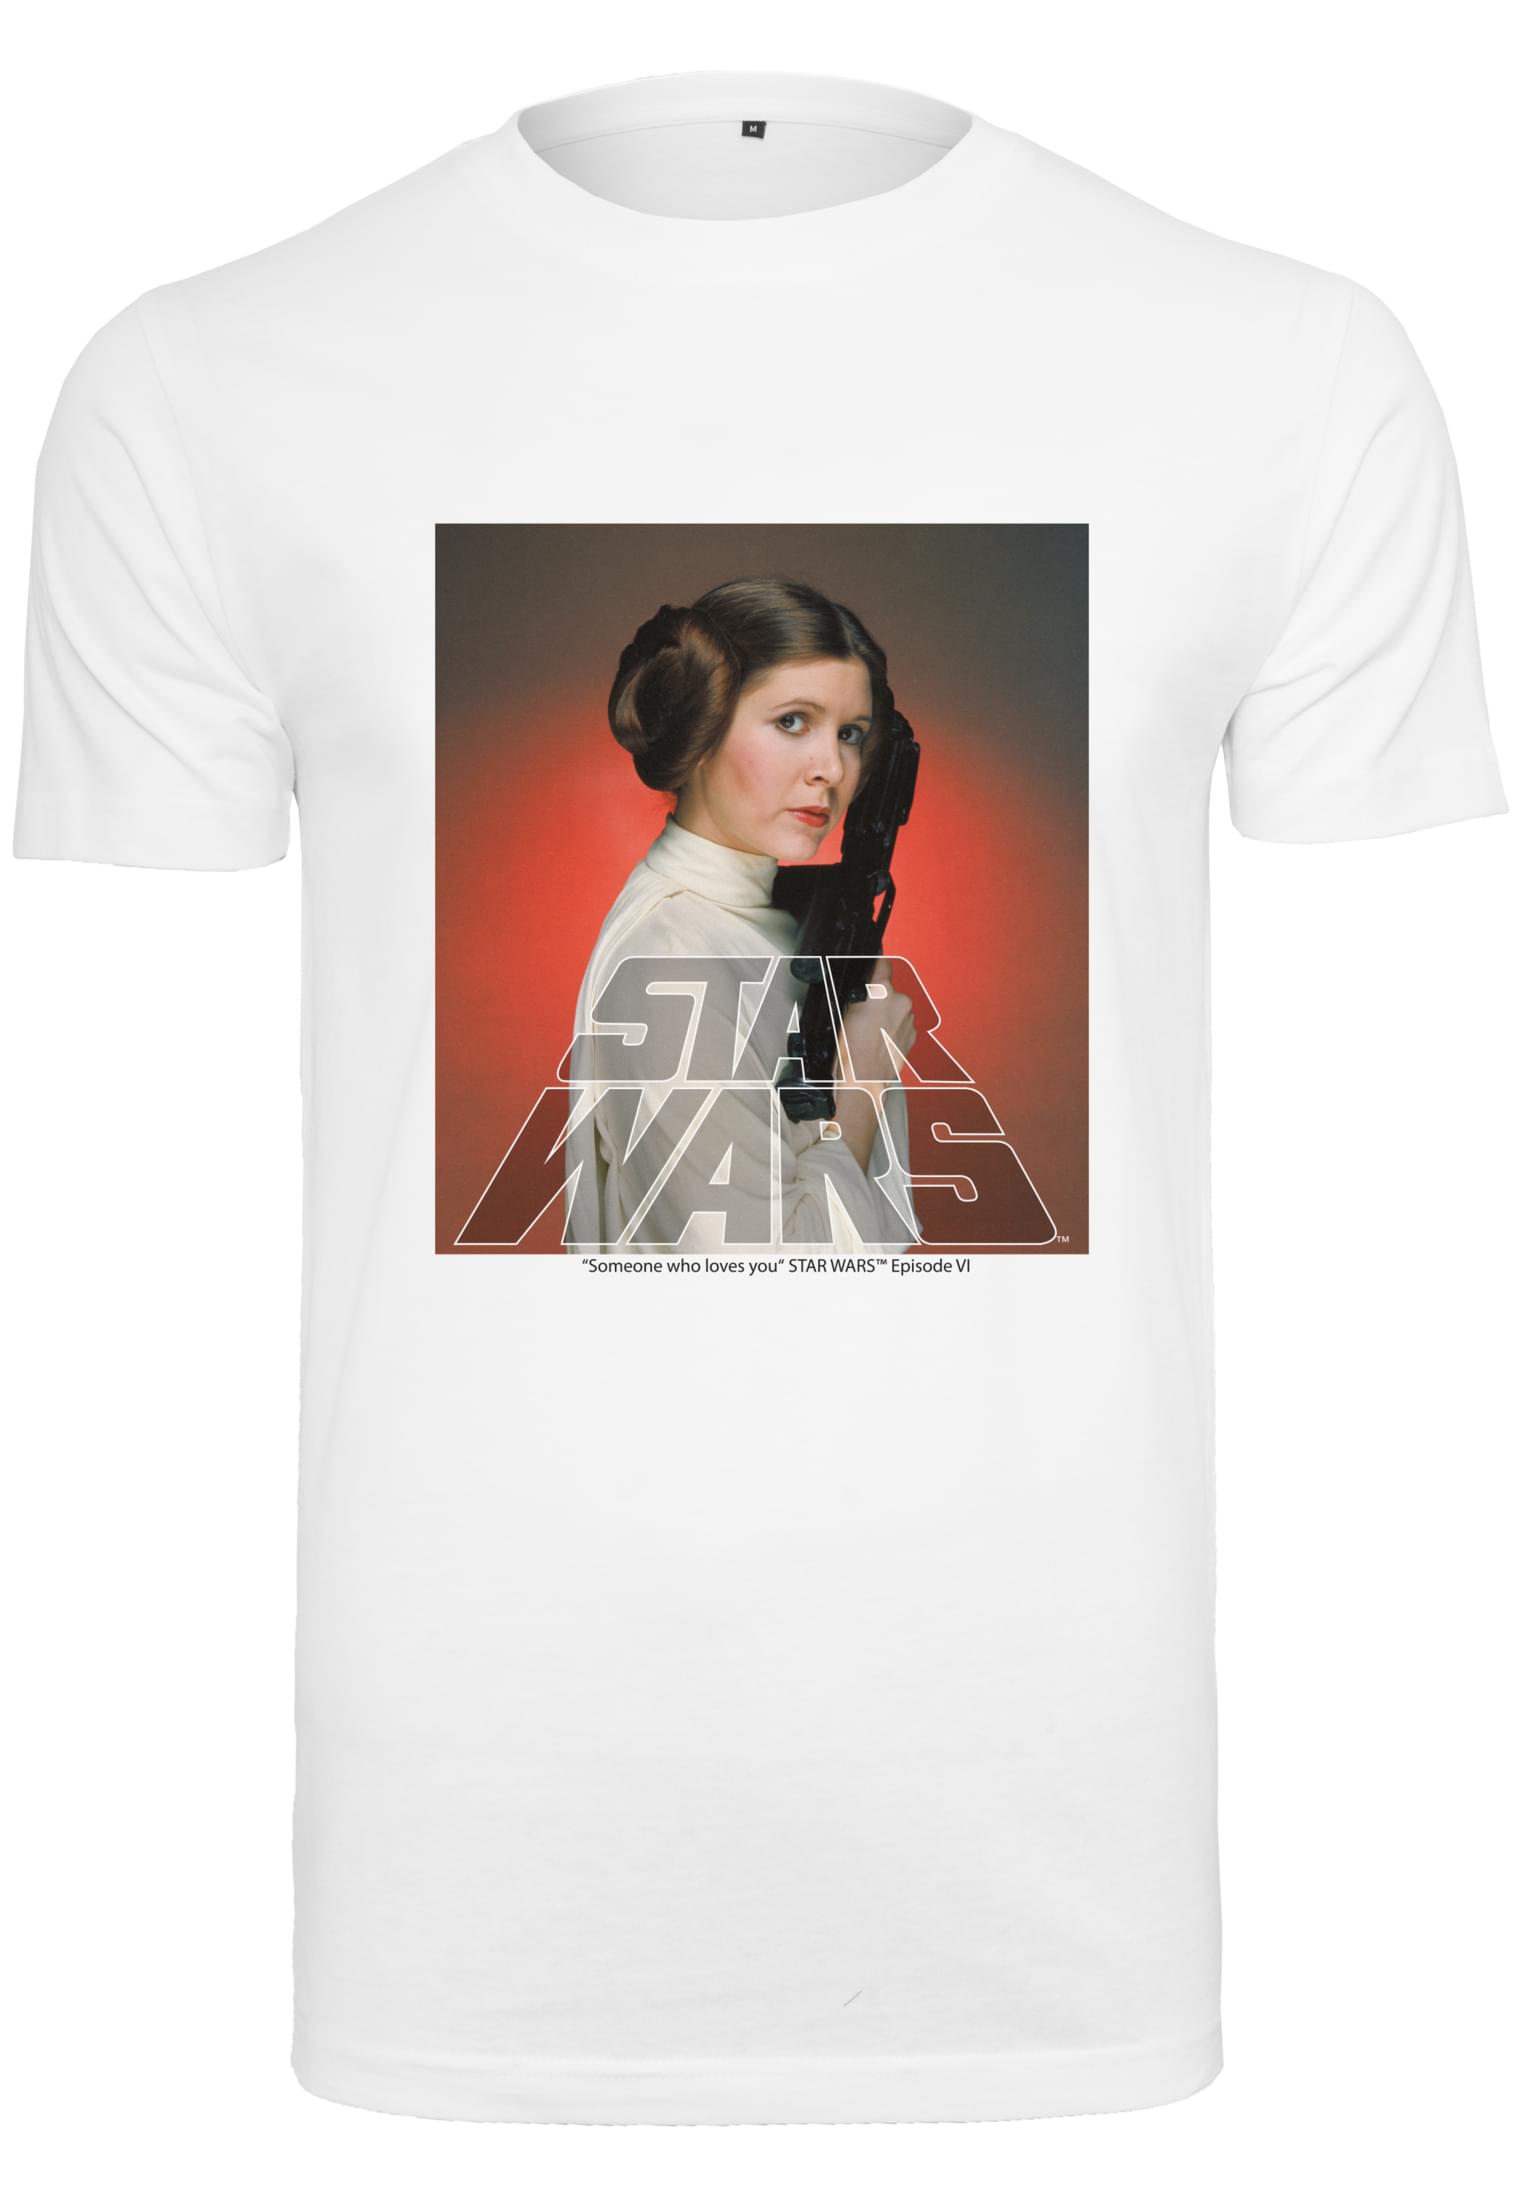 Princess Leia Tee from Star Wars White